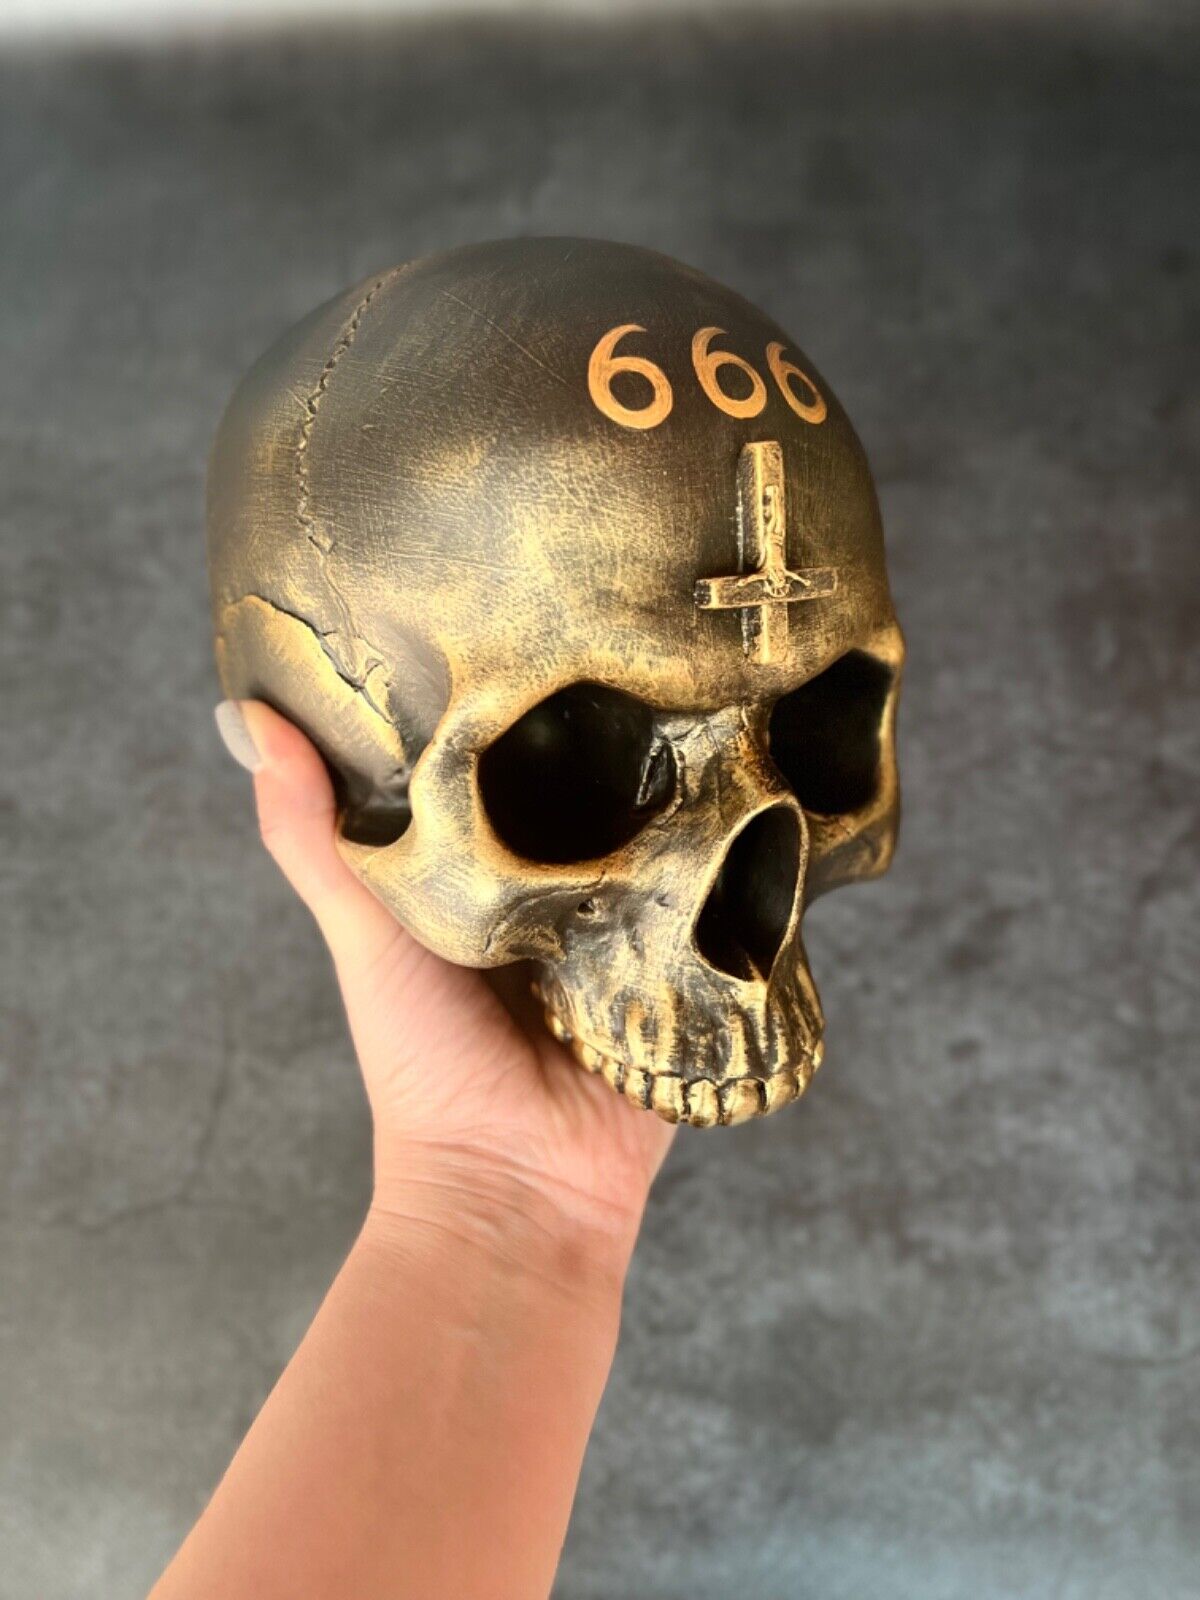 Satan Skull 666 Inverted cross Occultism  Alrar Witchcraft tools HANDMADE